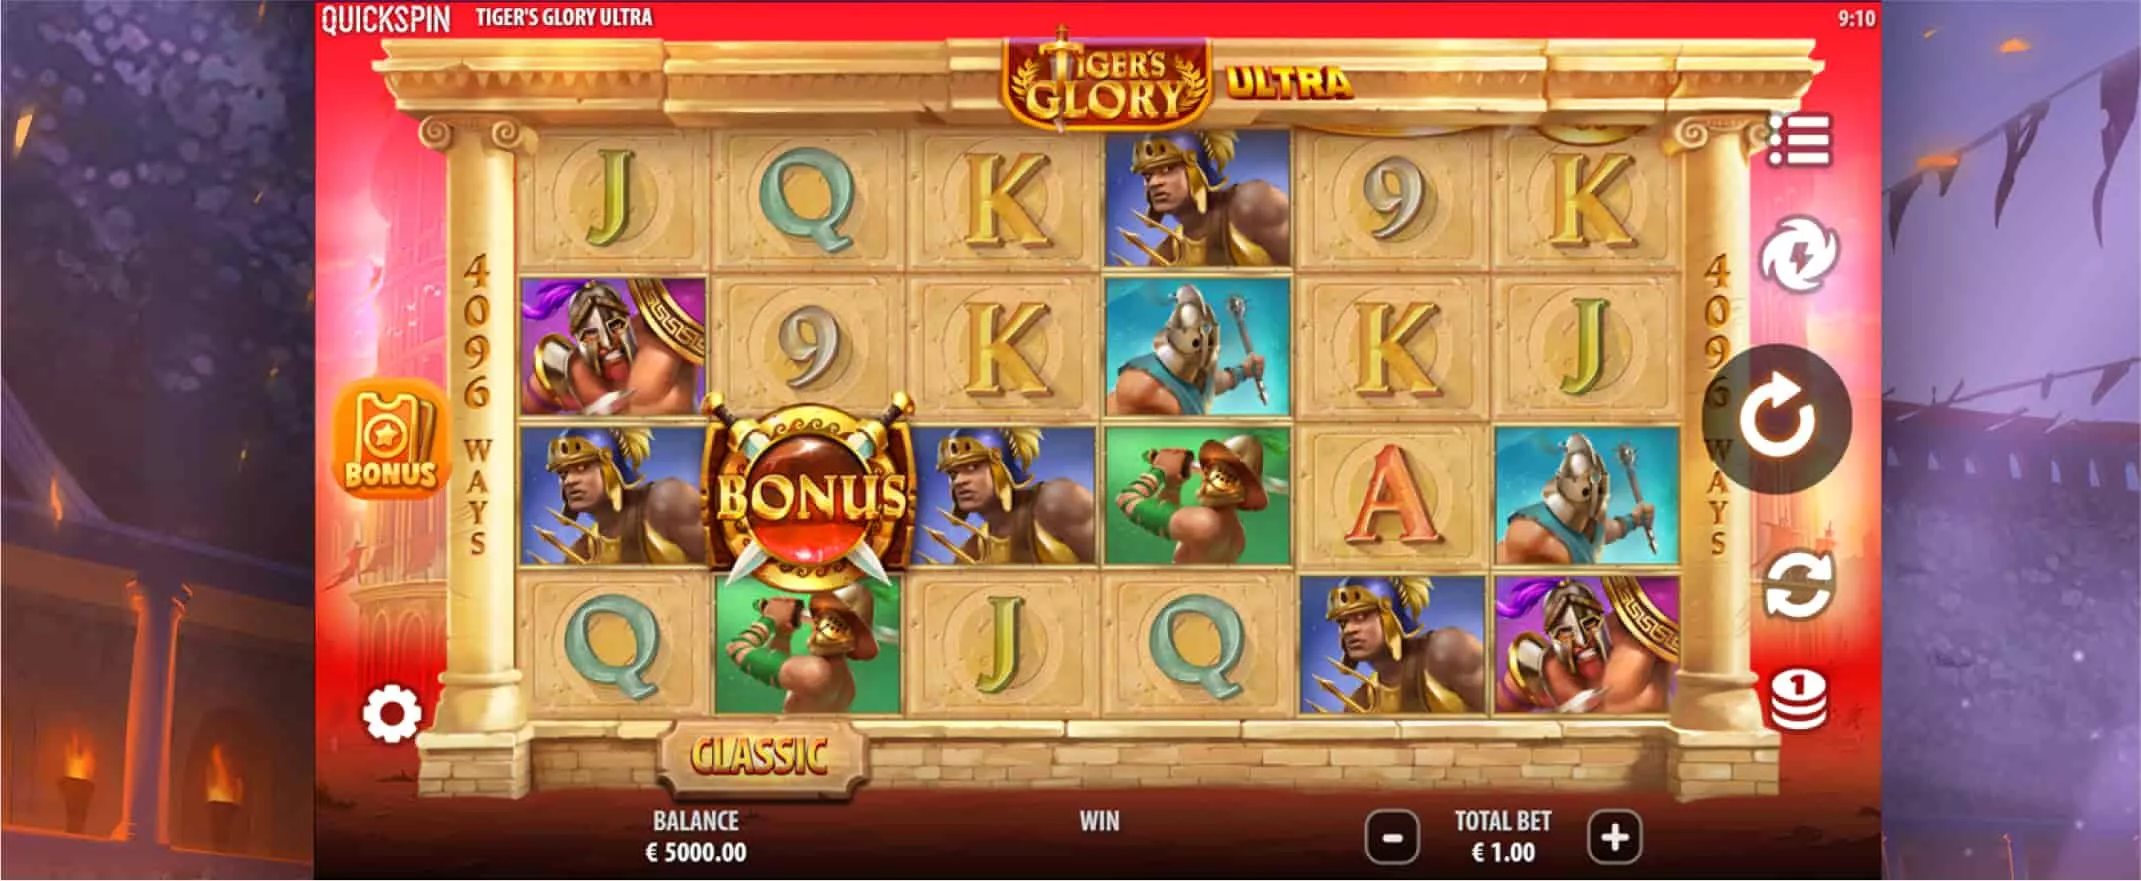 Tiger's Glory Ultra slot screenshot of the reels